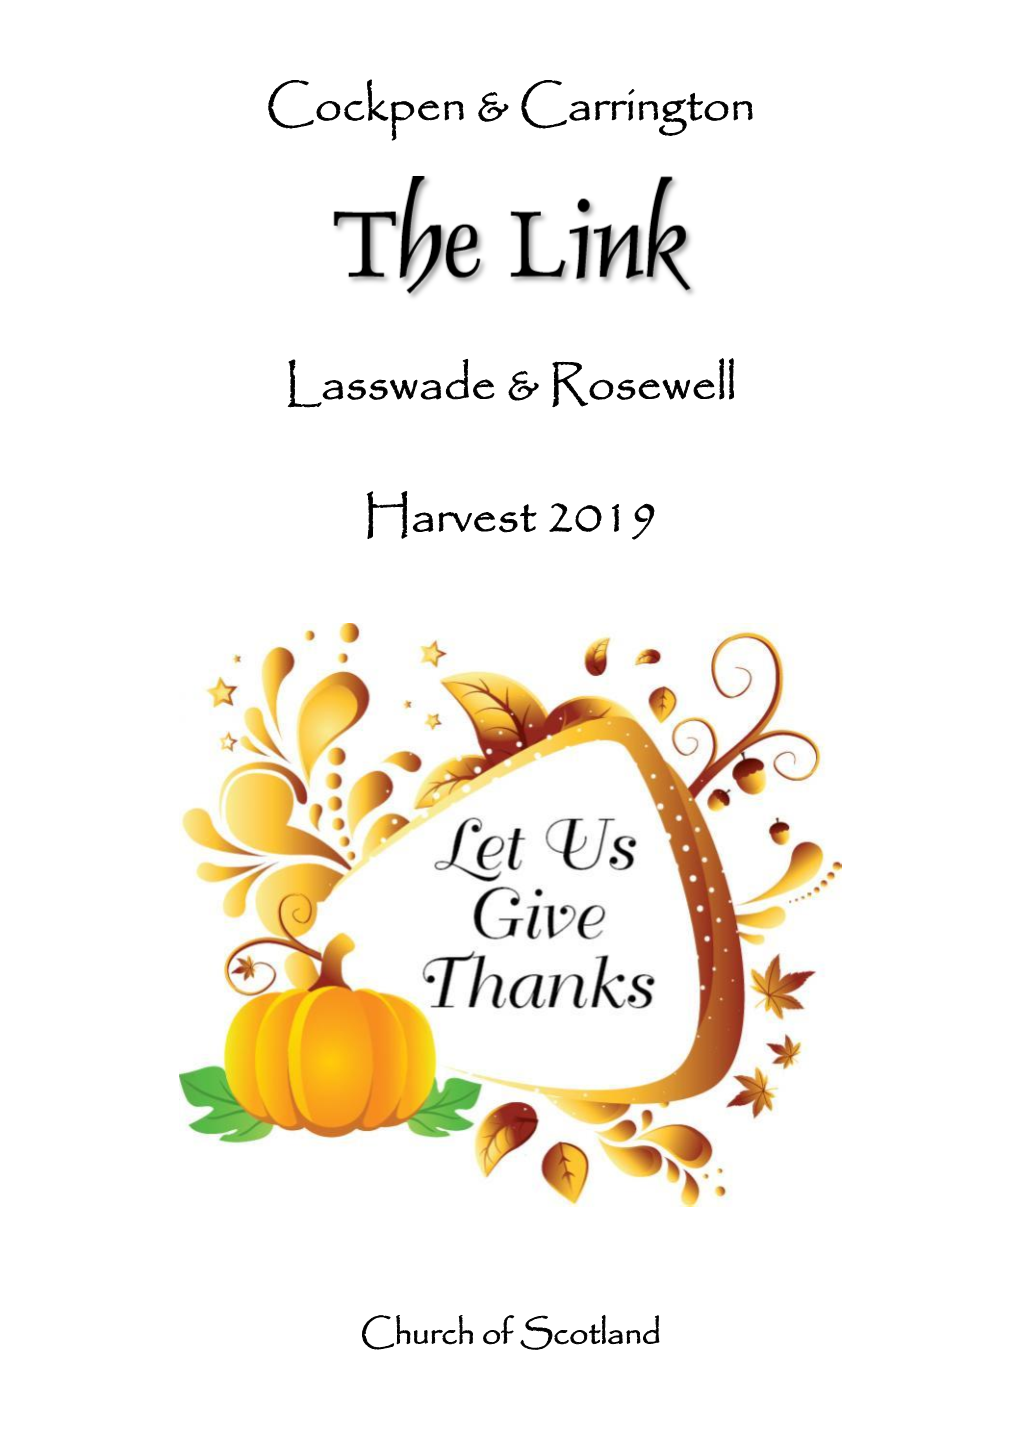 Cockpen & Carrington Lasswade & Rosewell Harvest 2019